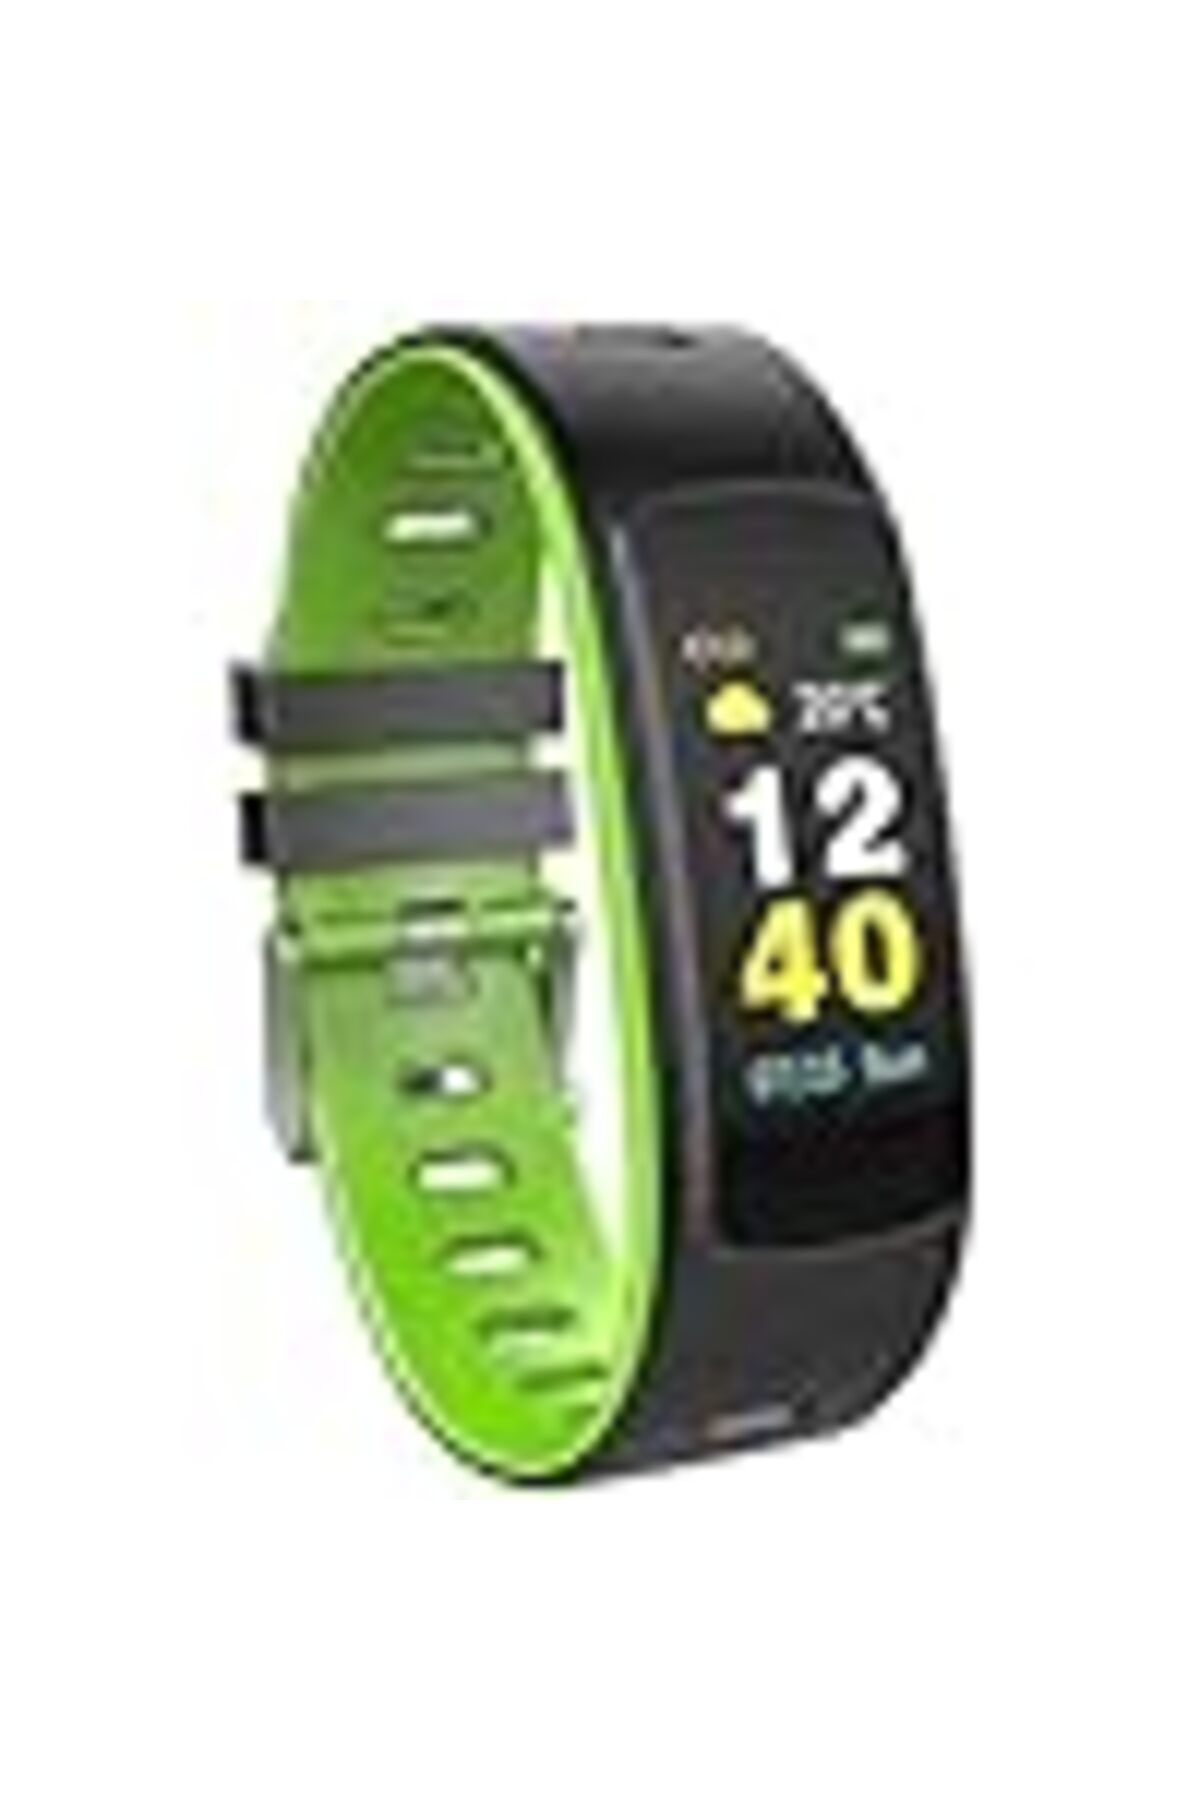 Genel Markalar Ever Fit W45 Android/ıos Smart Watch Full Dokunmatik Renkli Ekran Yeşil/siyah Akıllı Bilekli